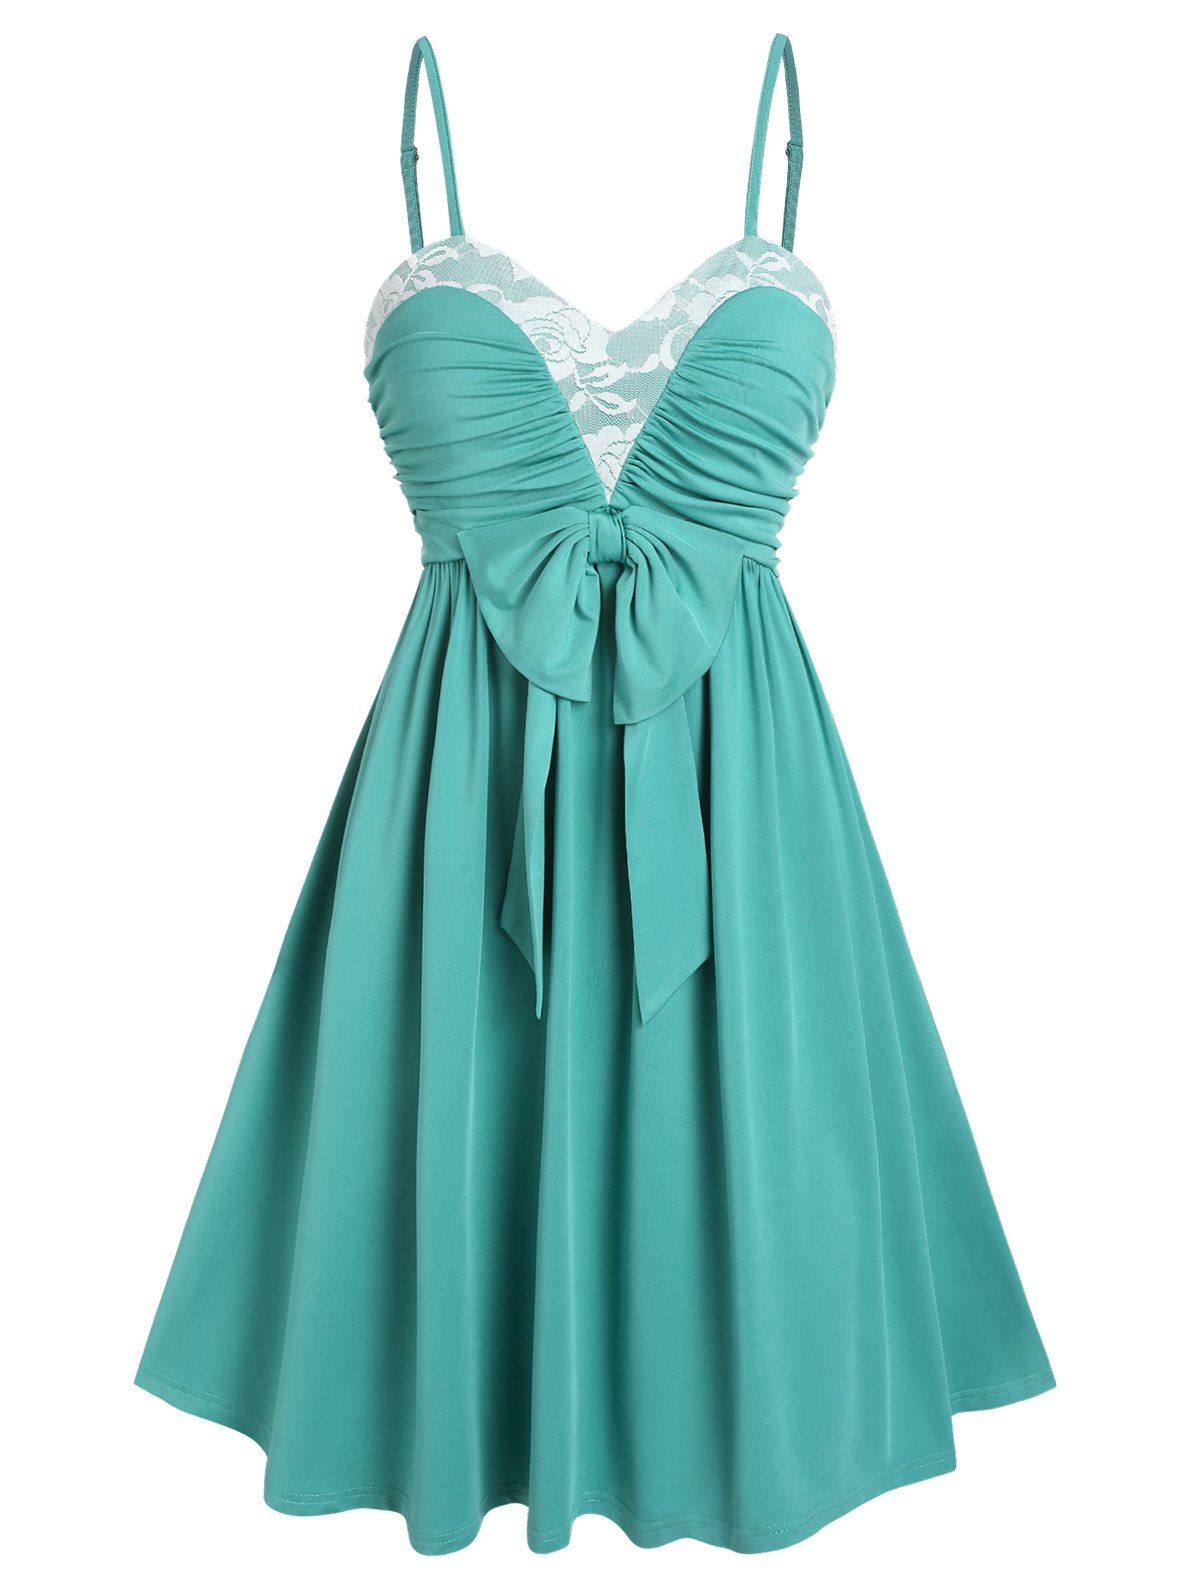 Bowknot Cinched Lace A Line Dress - GREEN XXXL